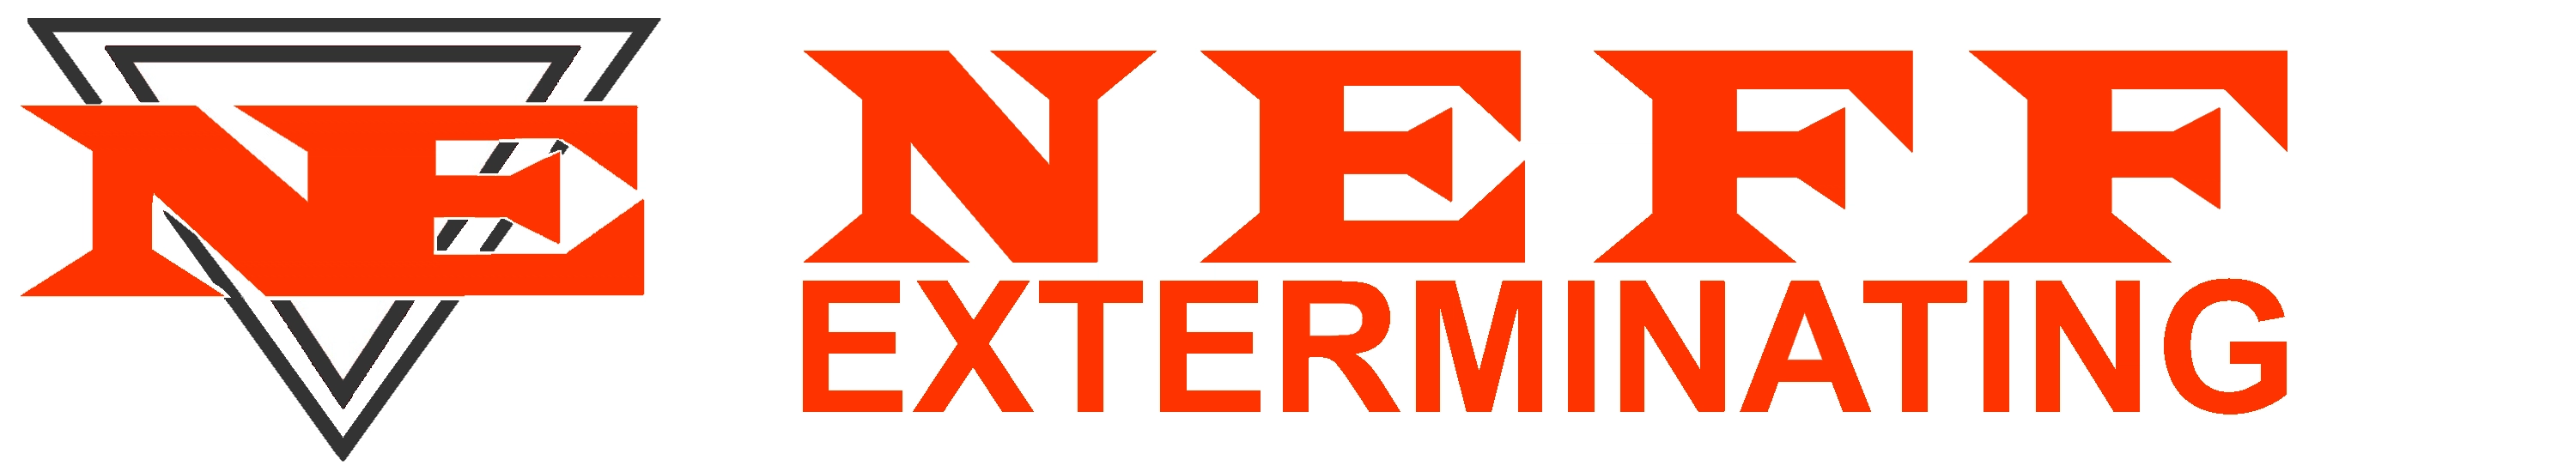 Neff Exterminating Logo